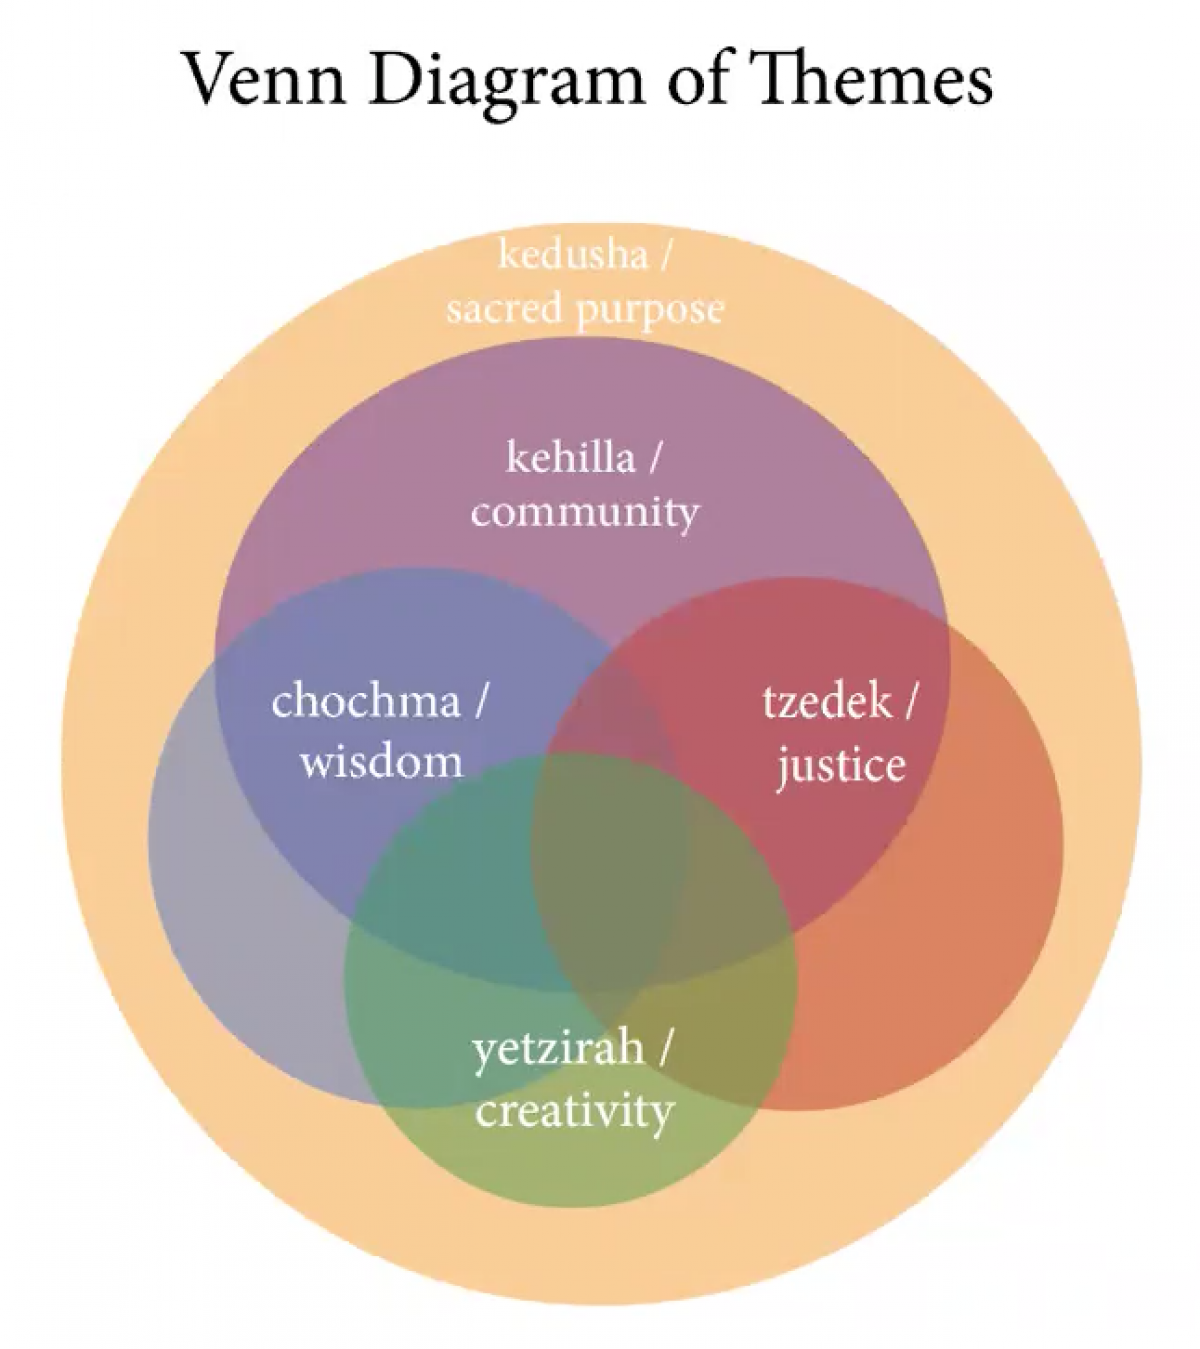 Venn diagram of themes